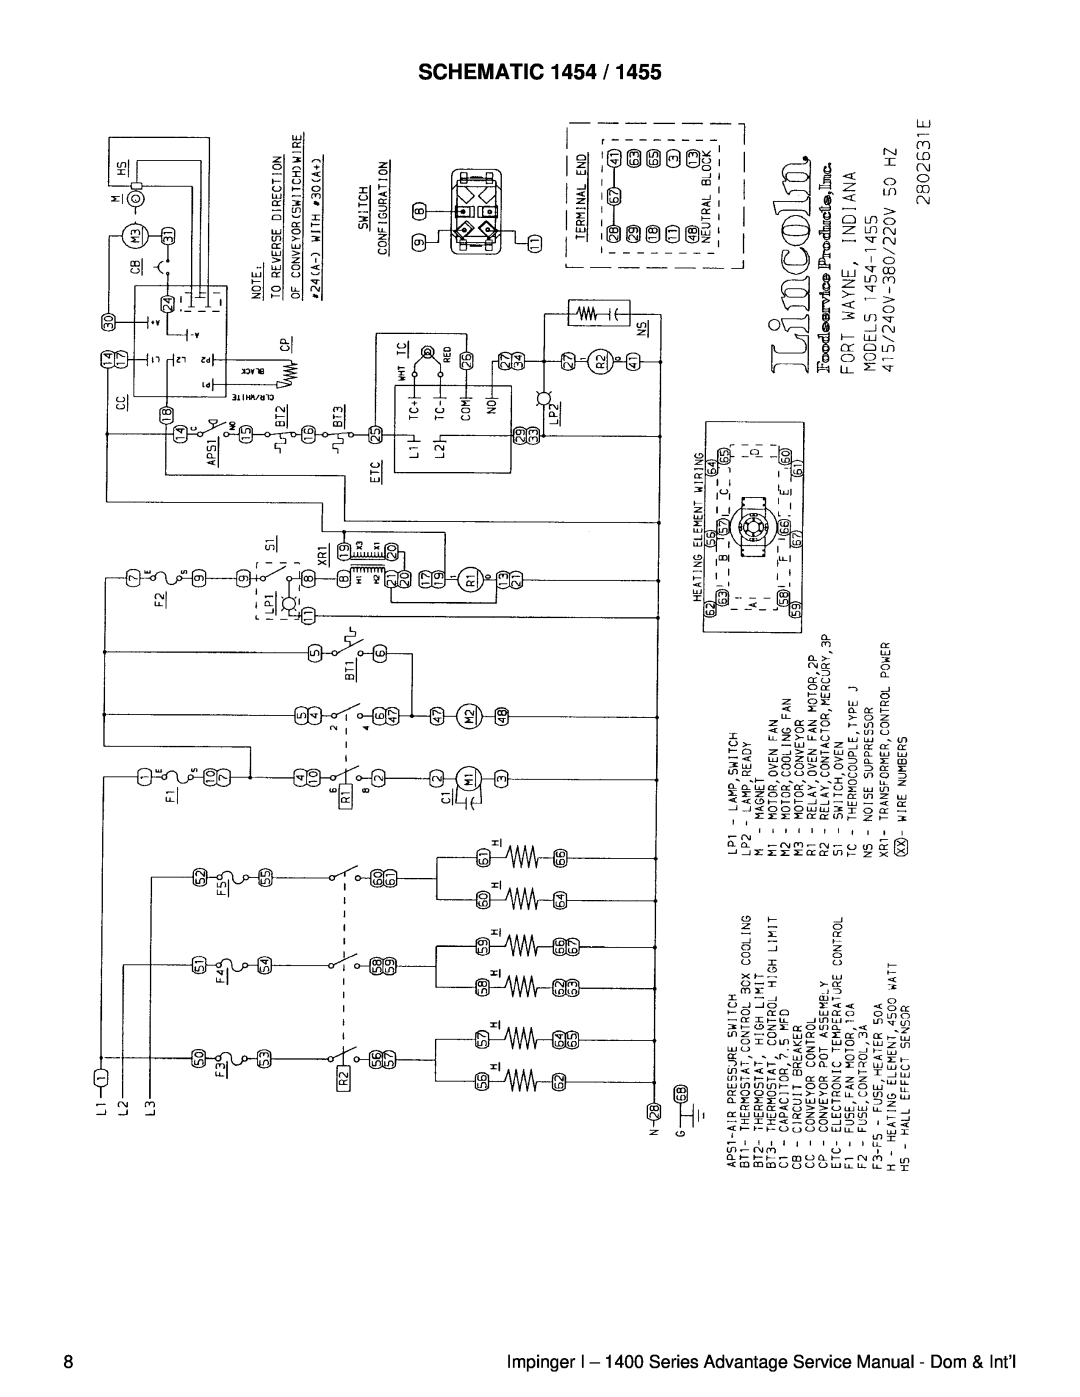 Lincoln 1400 Series service manual Schematic 